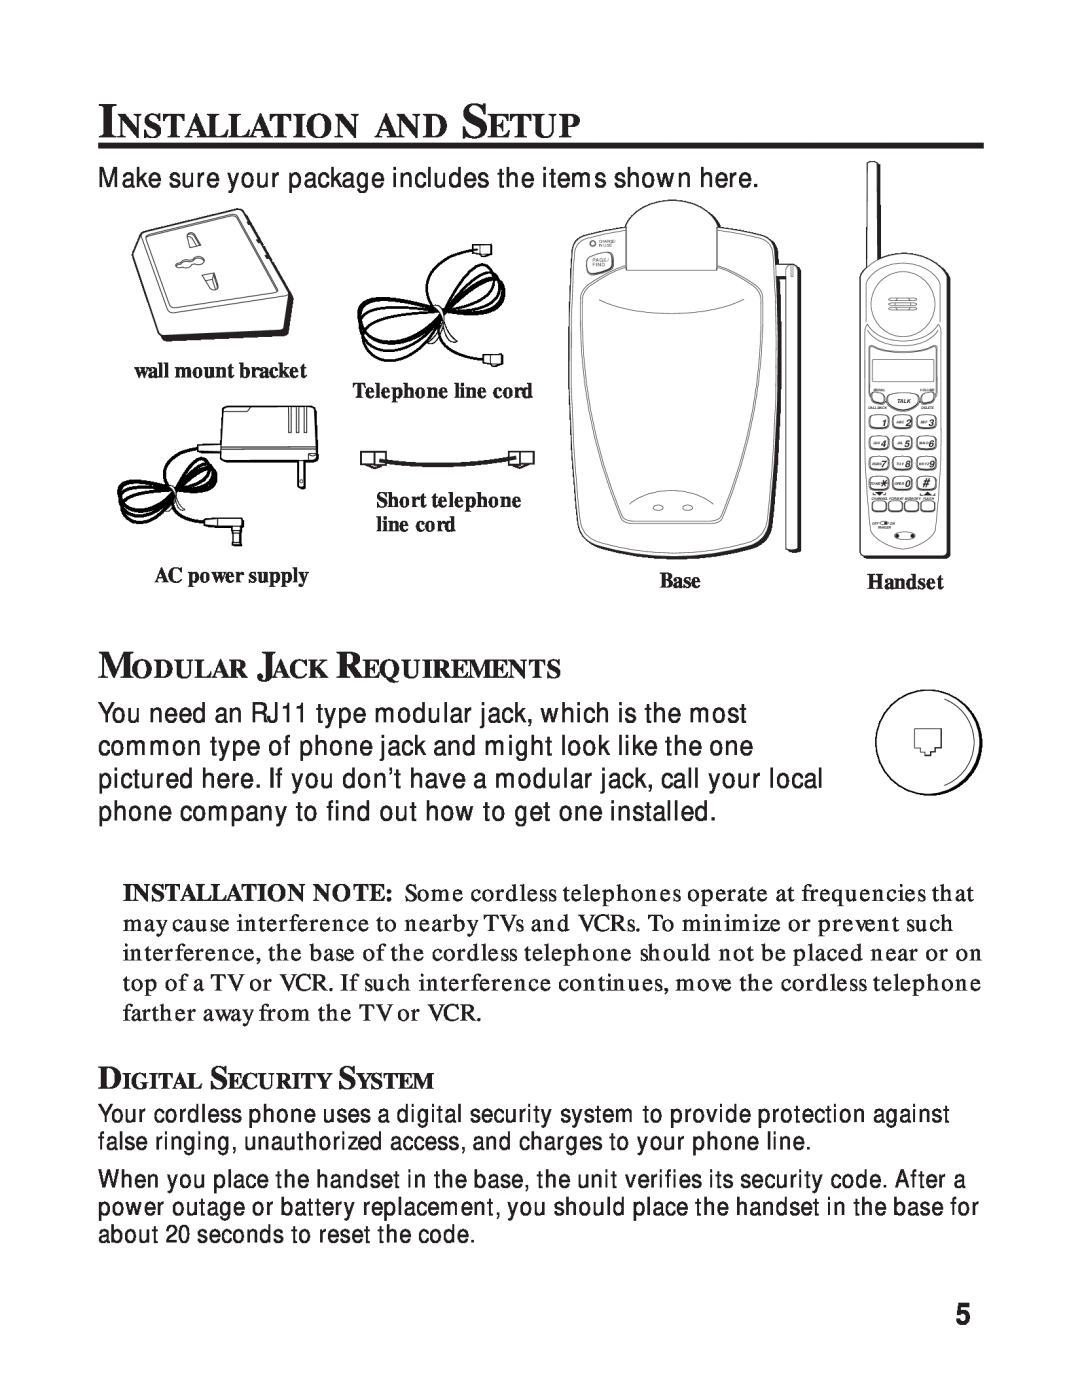 RCA 26730 manual Installation And Setup, Modular Jack Requirements 